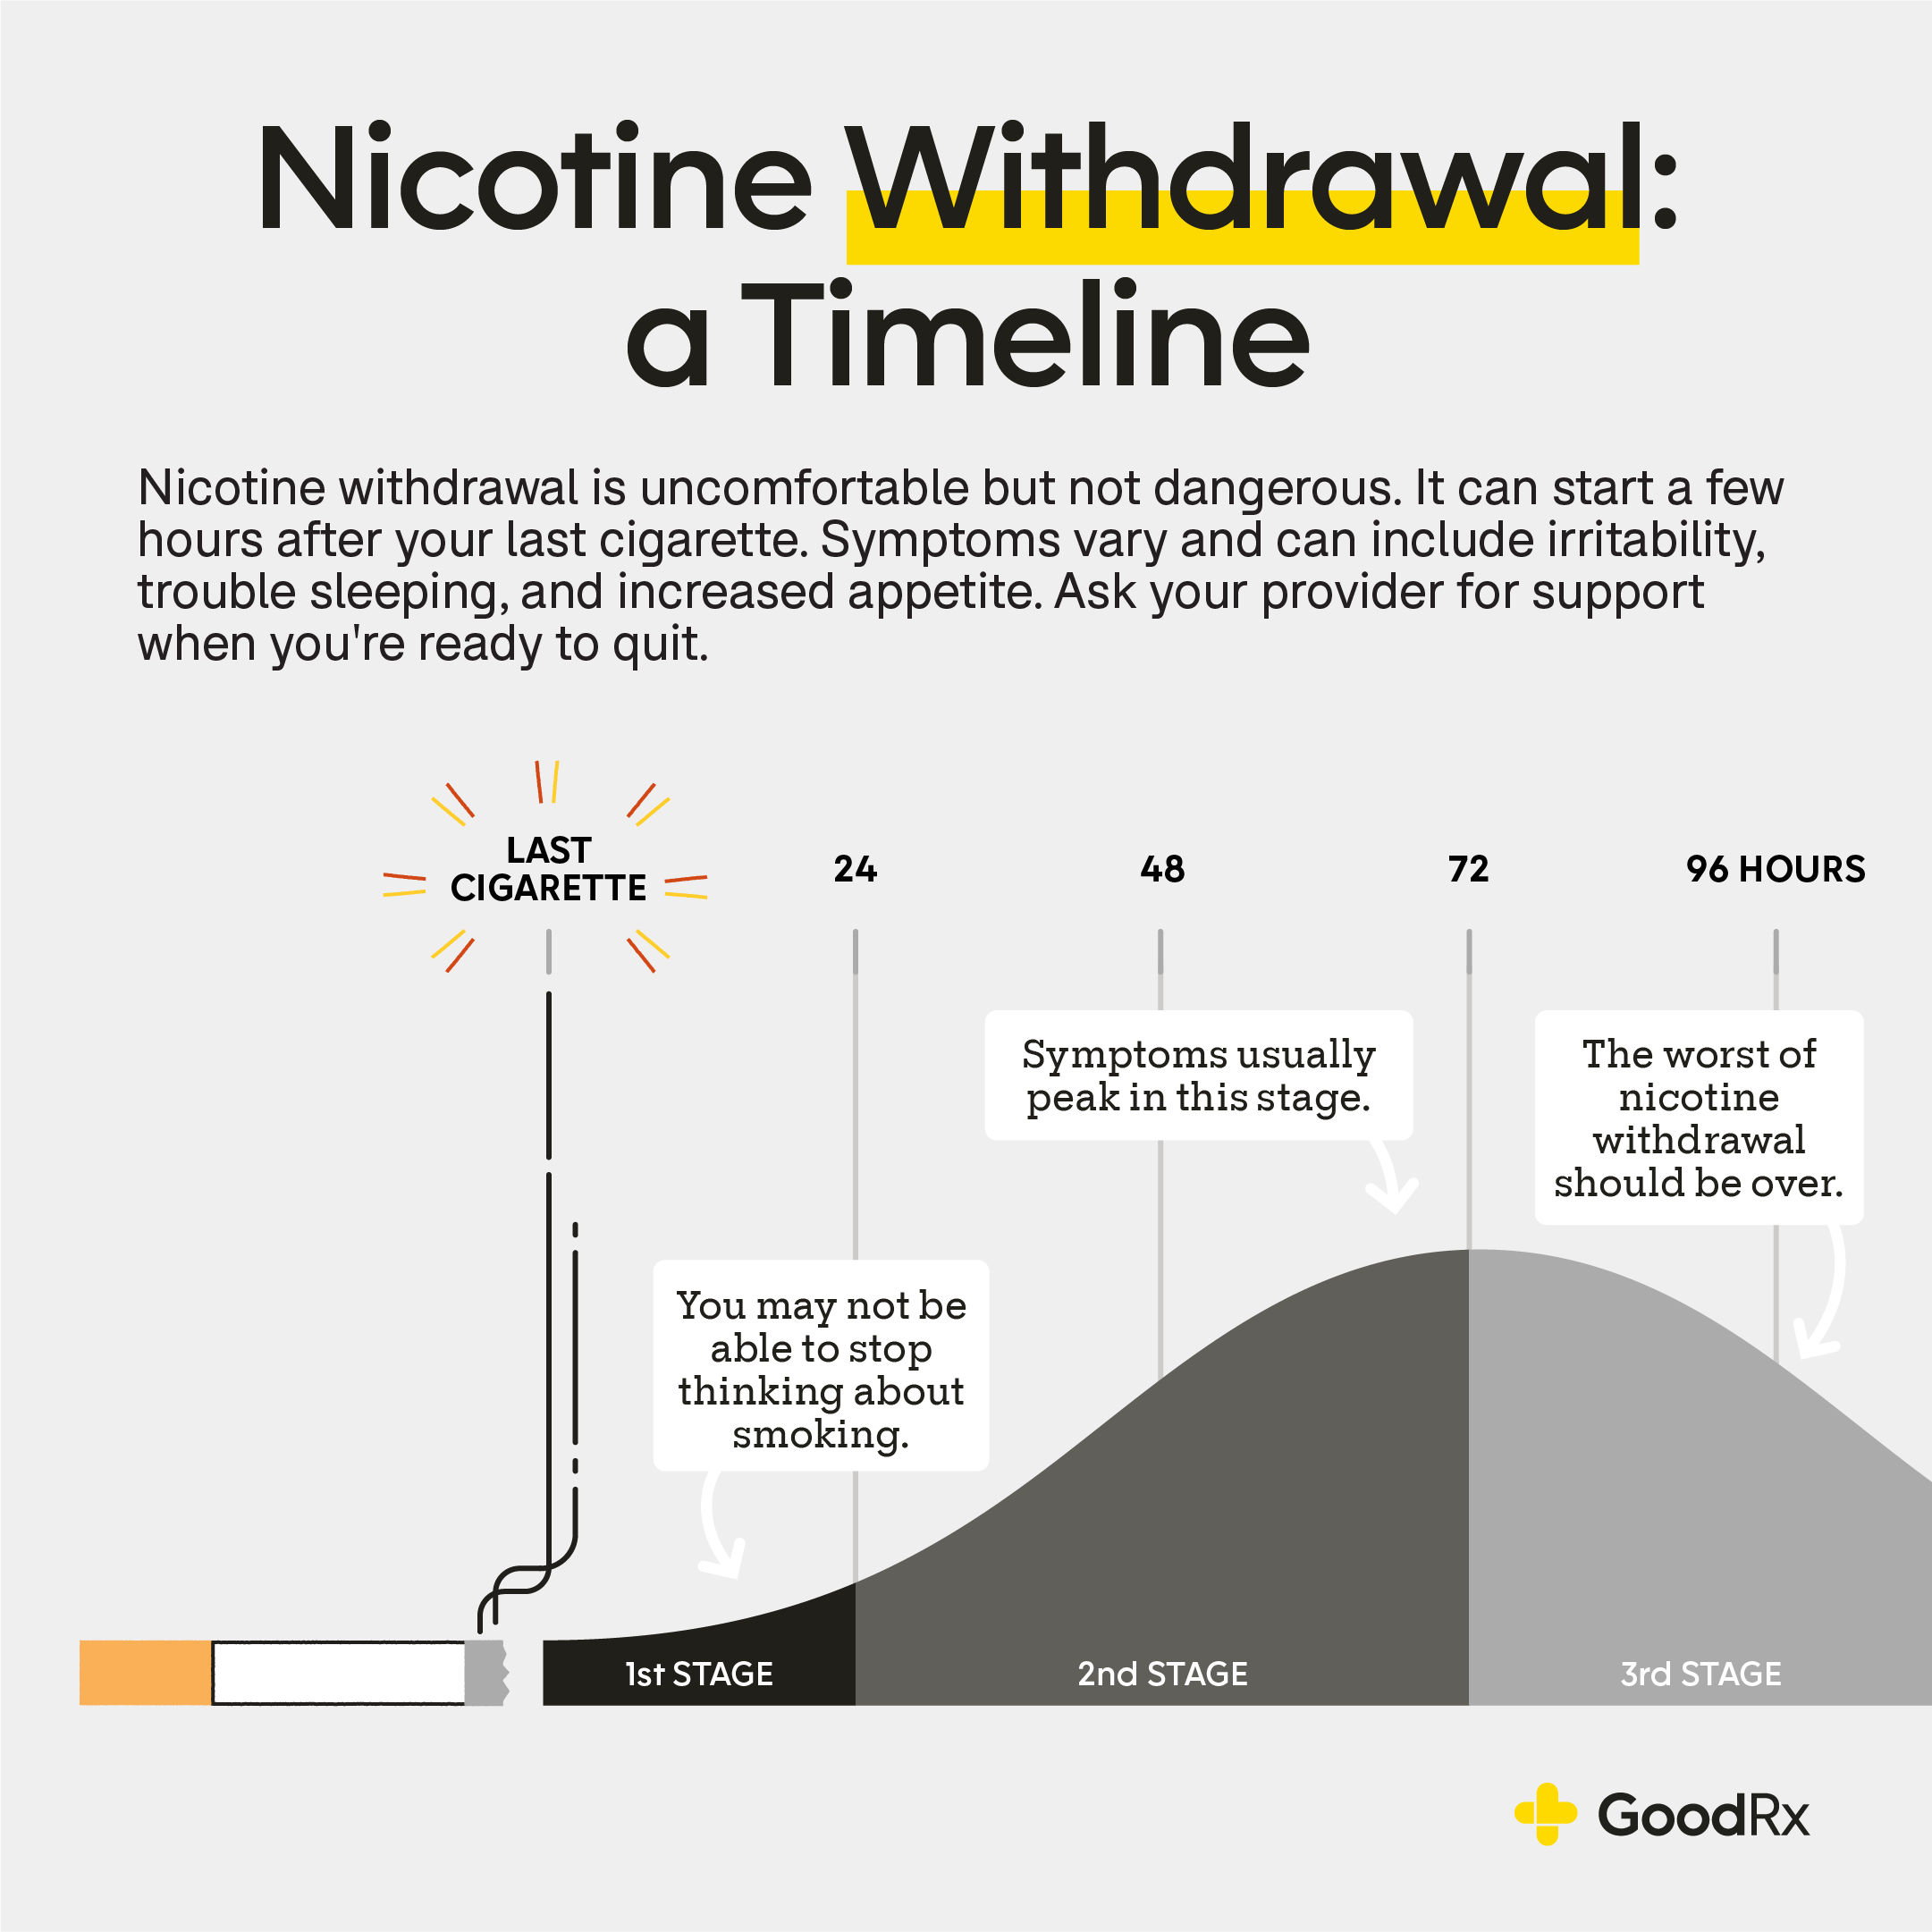 When Do Nicotine Withdrawals Start?